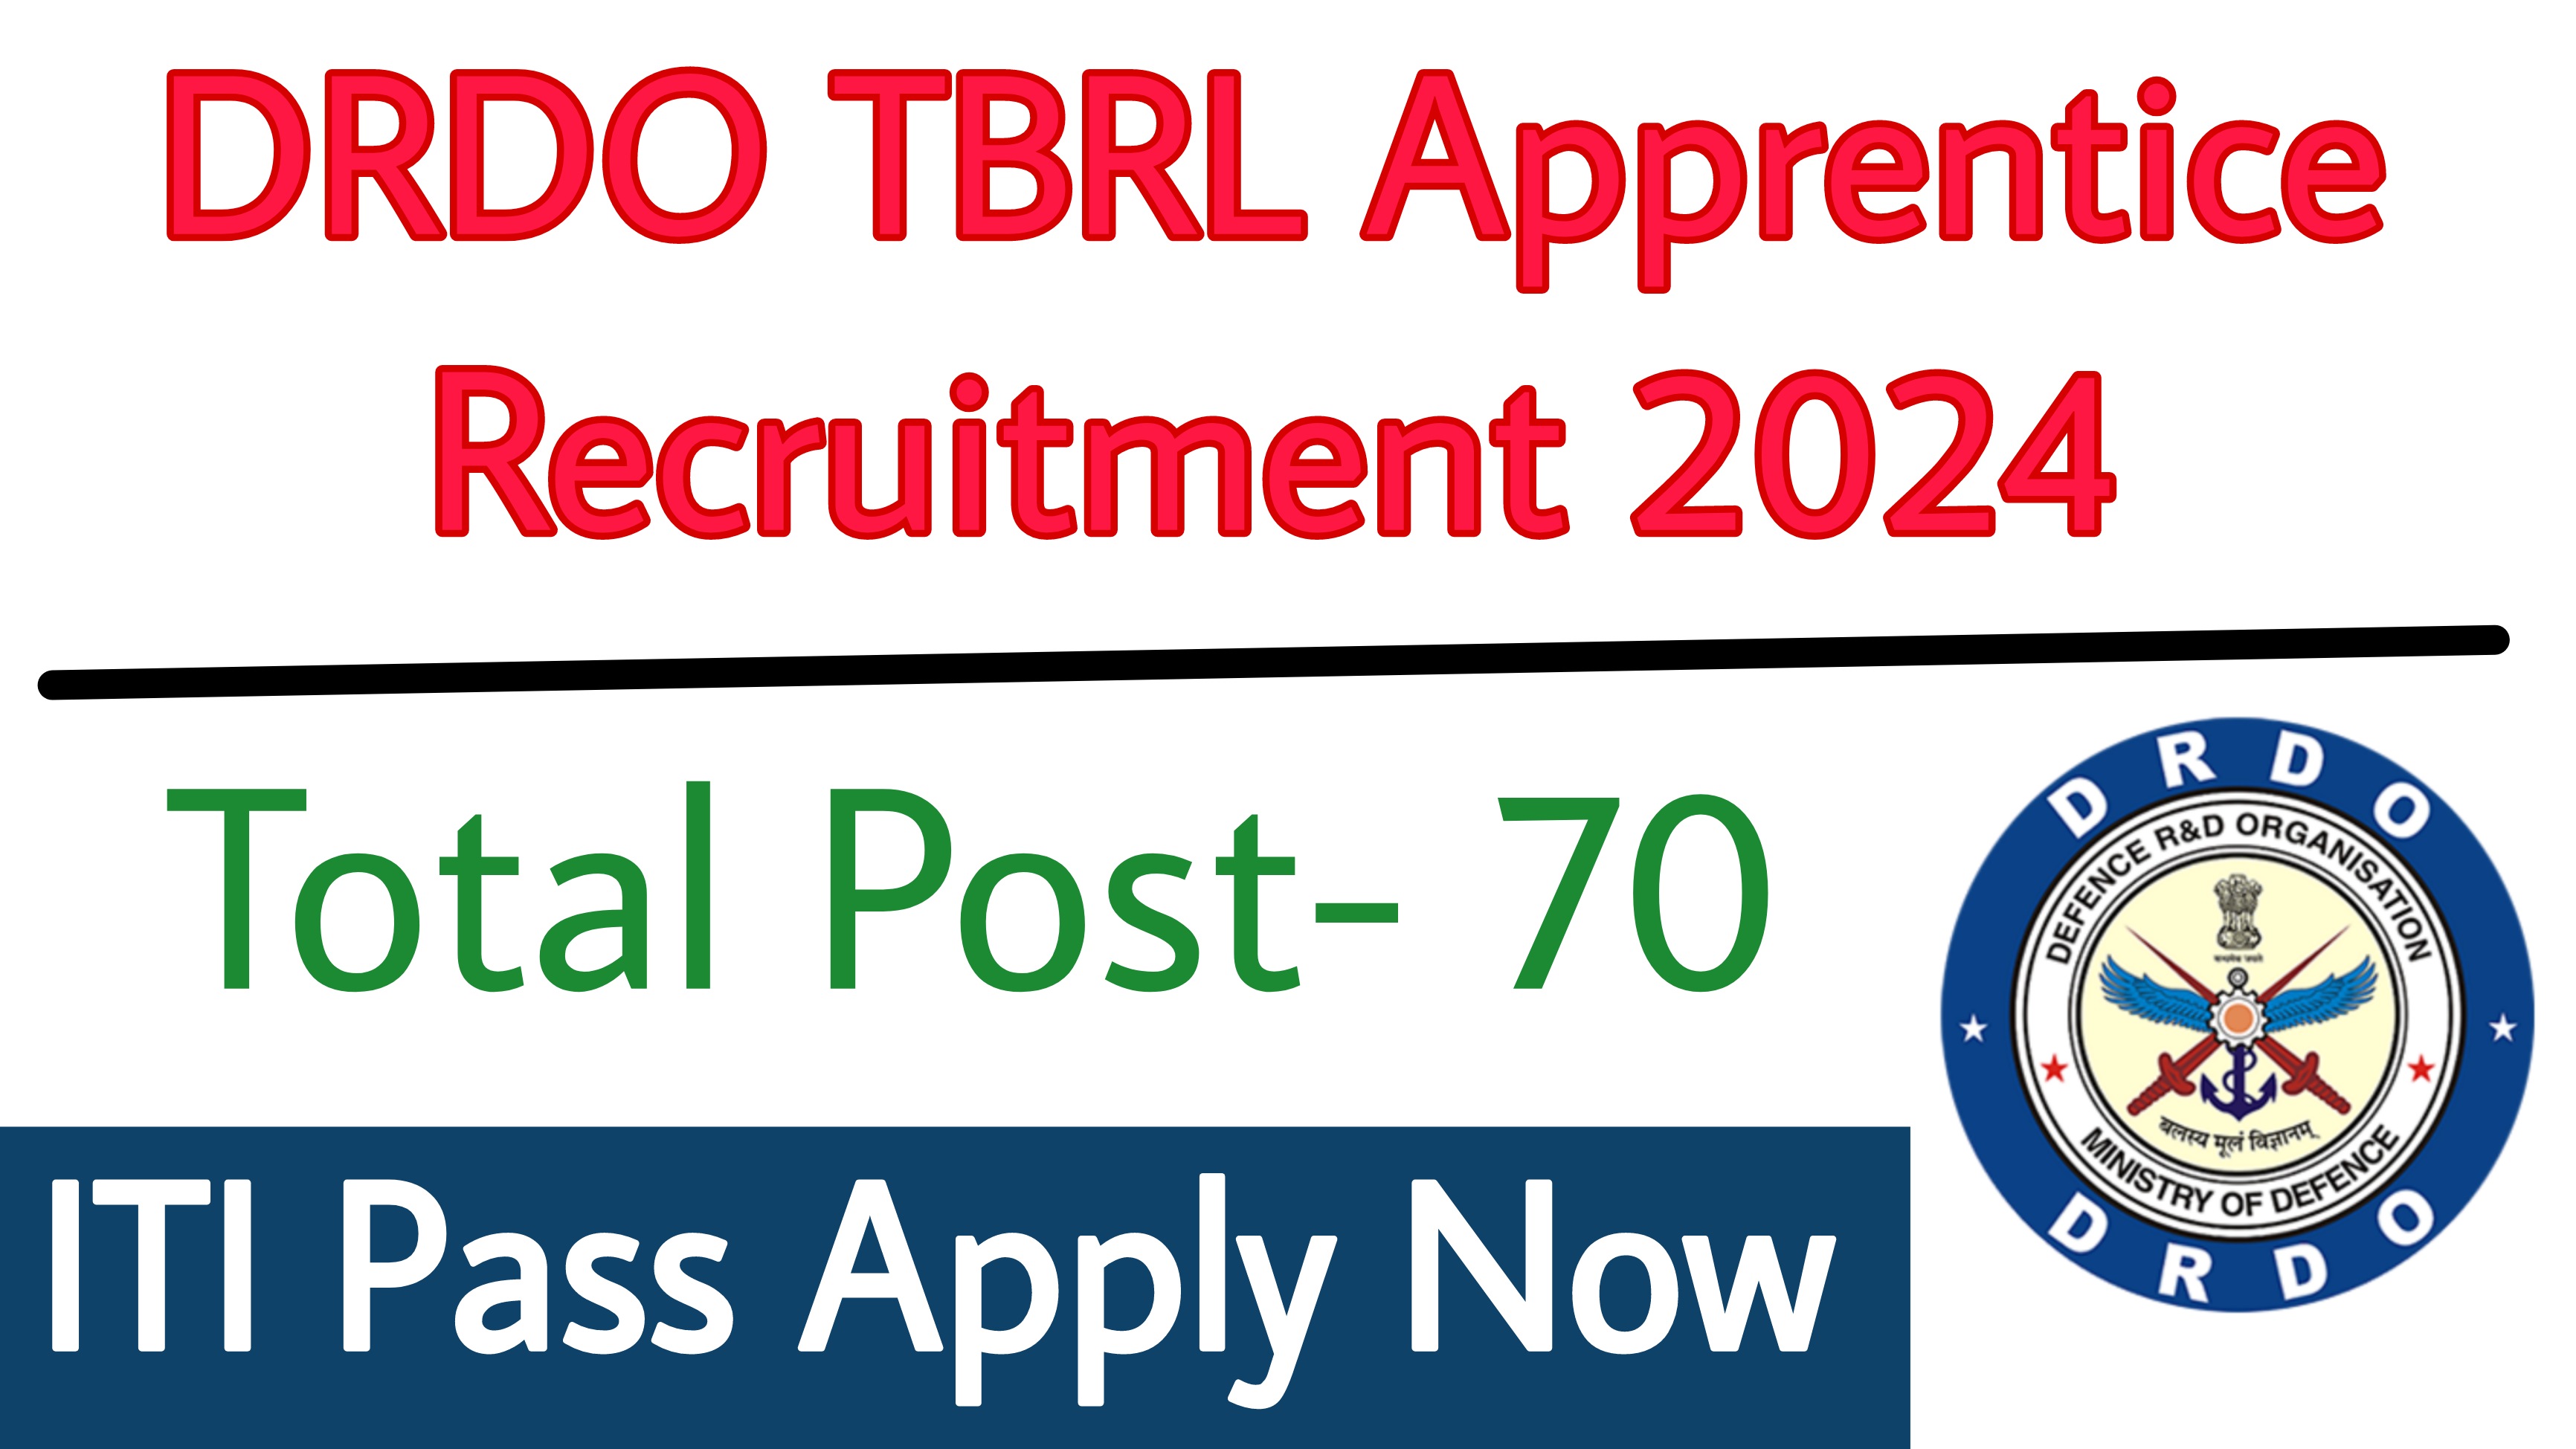 DRDO TBRL Apprentice Recruitment 2024